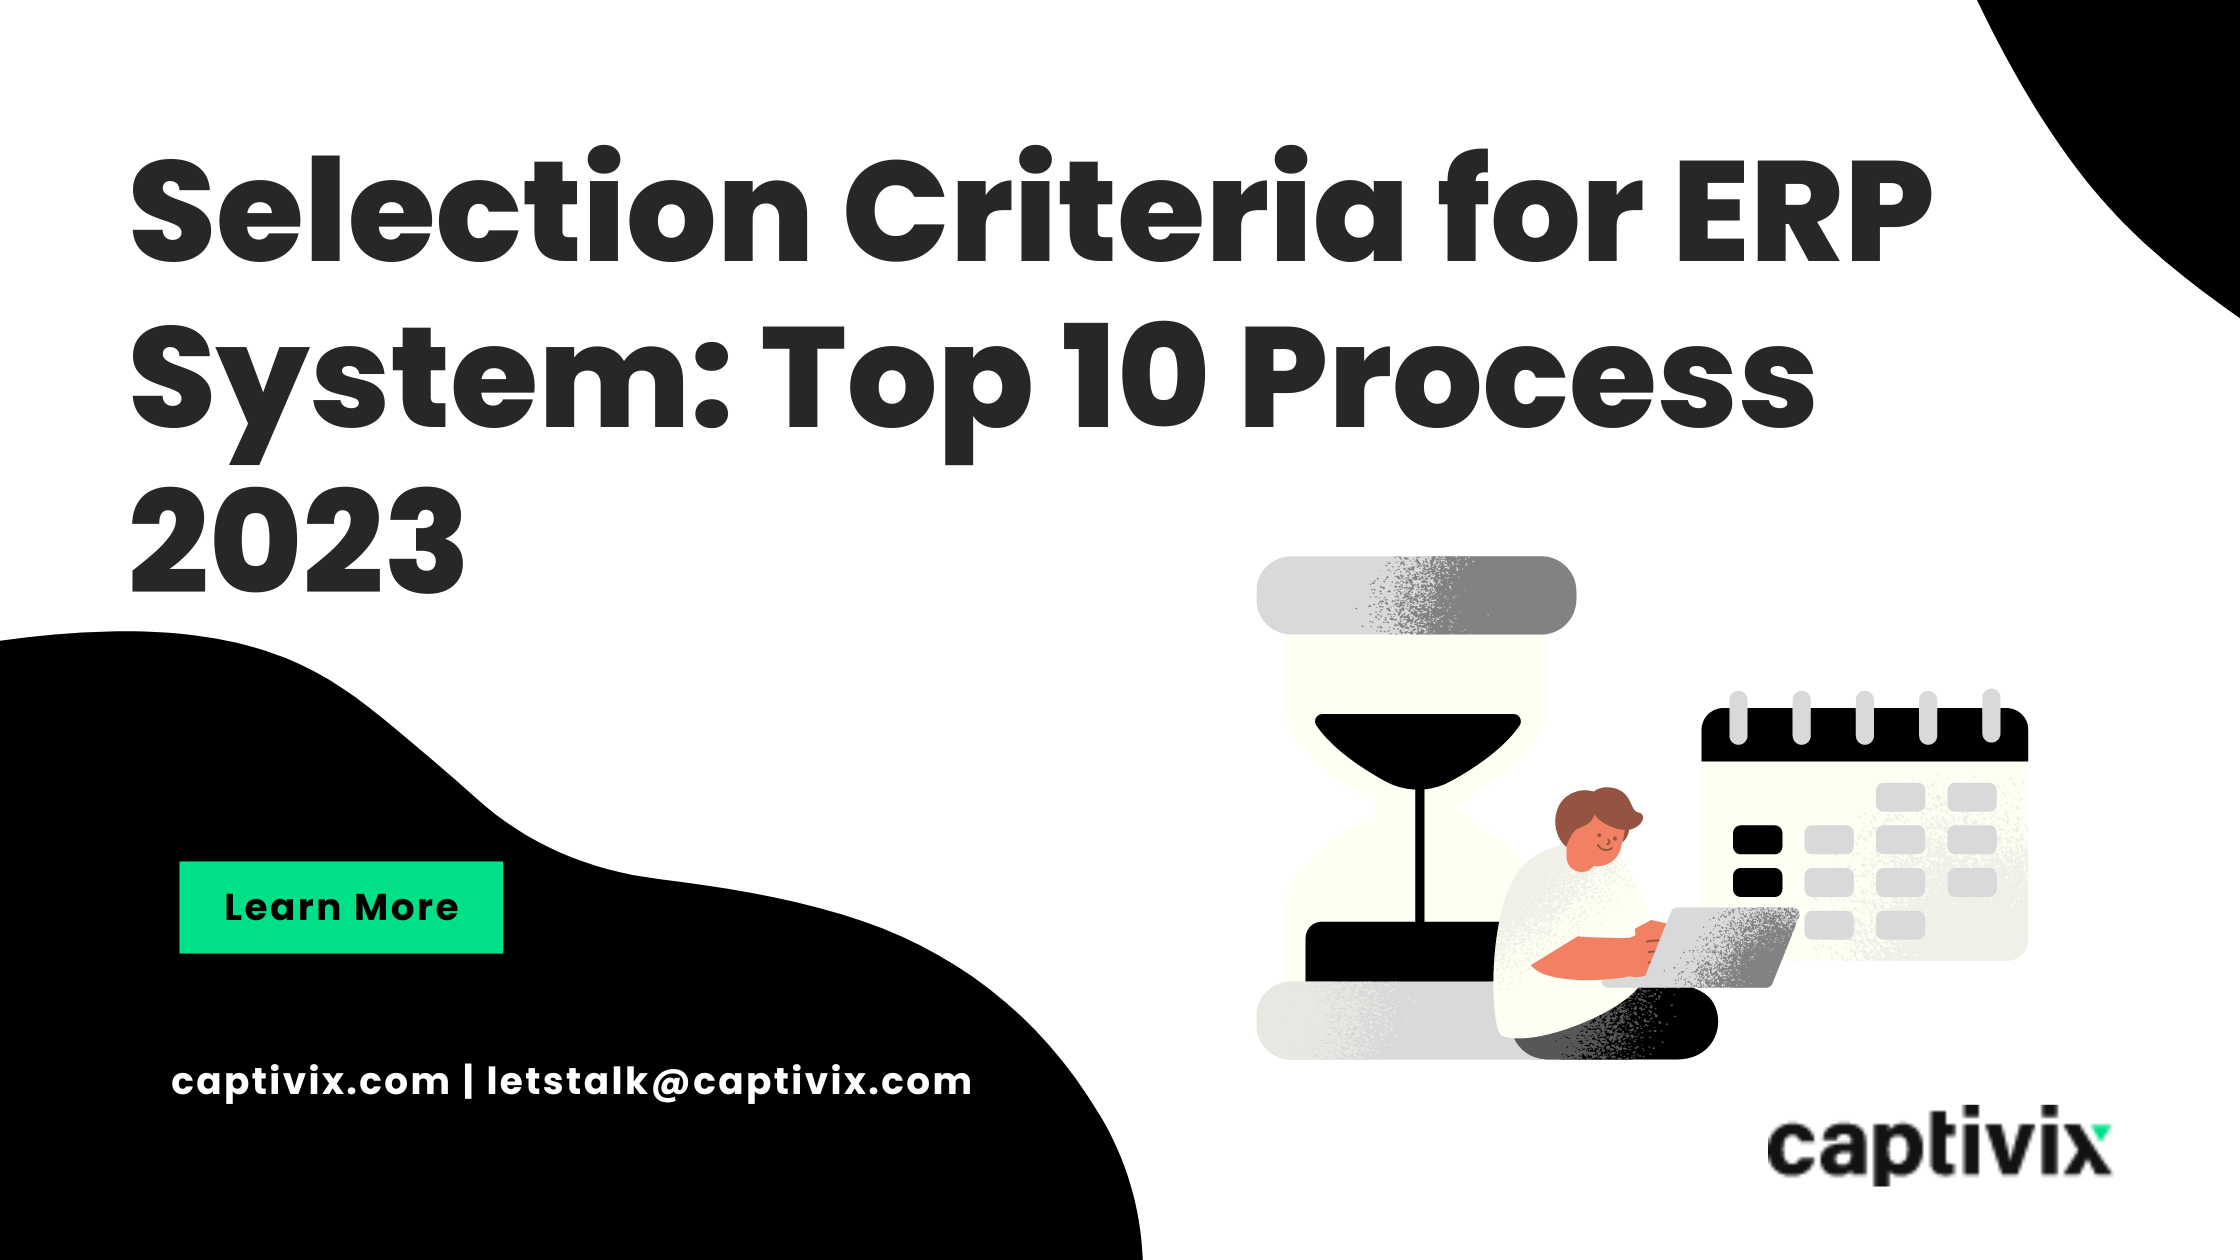 Selection Criteria for ERP System Captivix